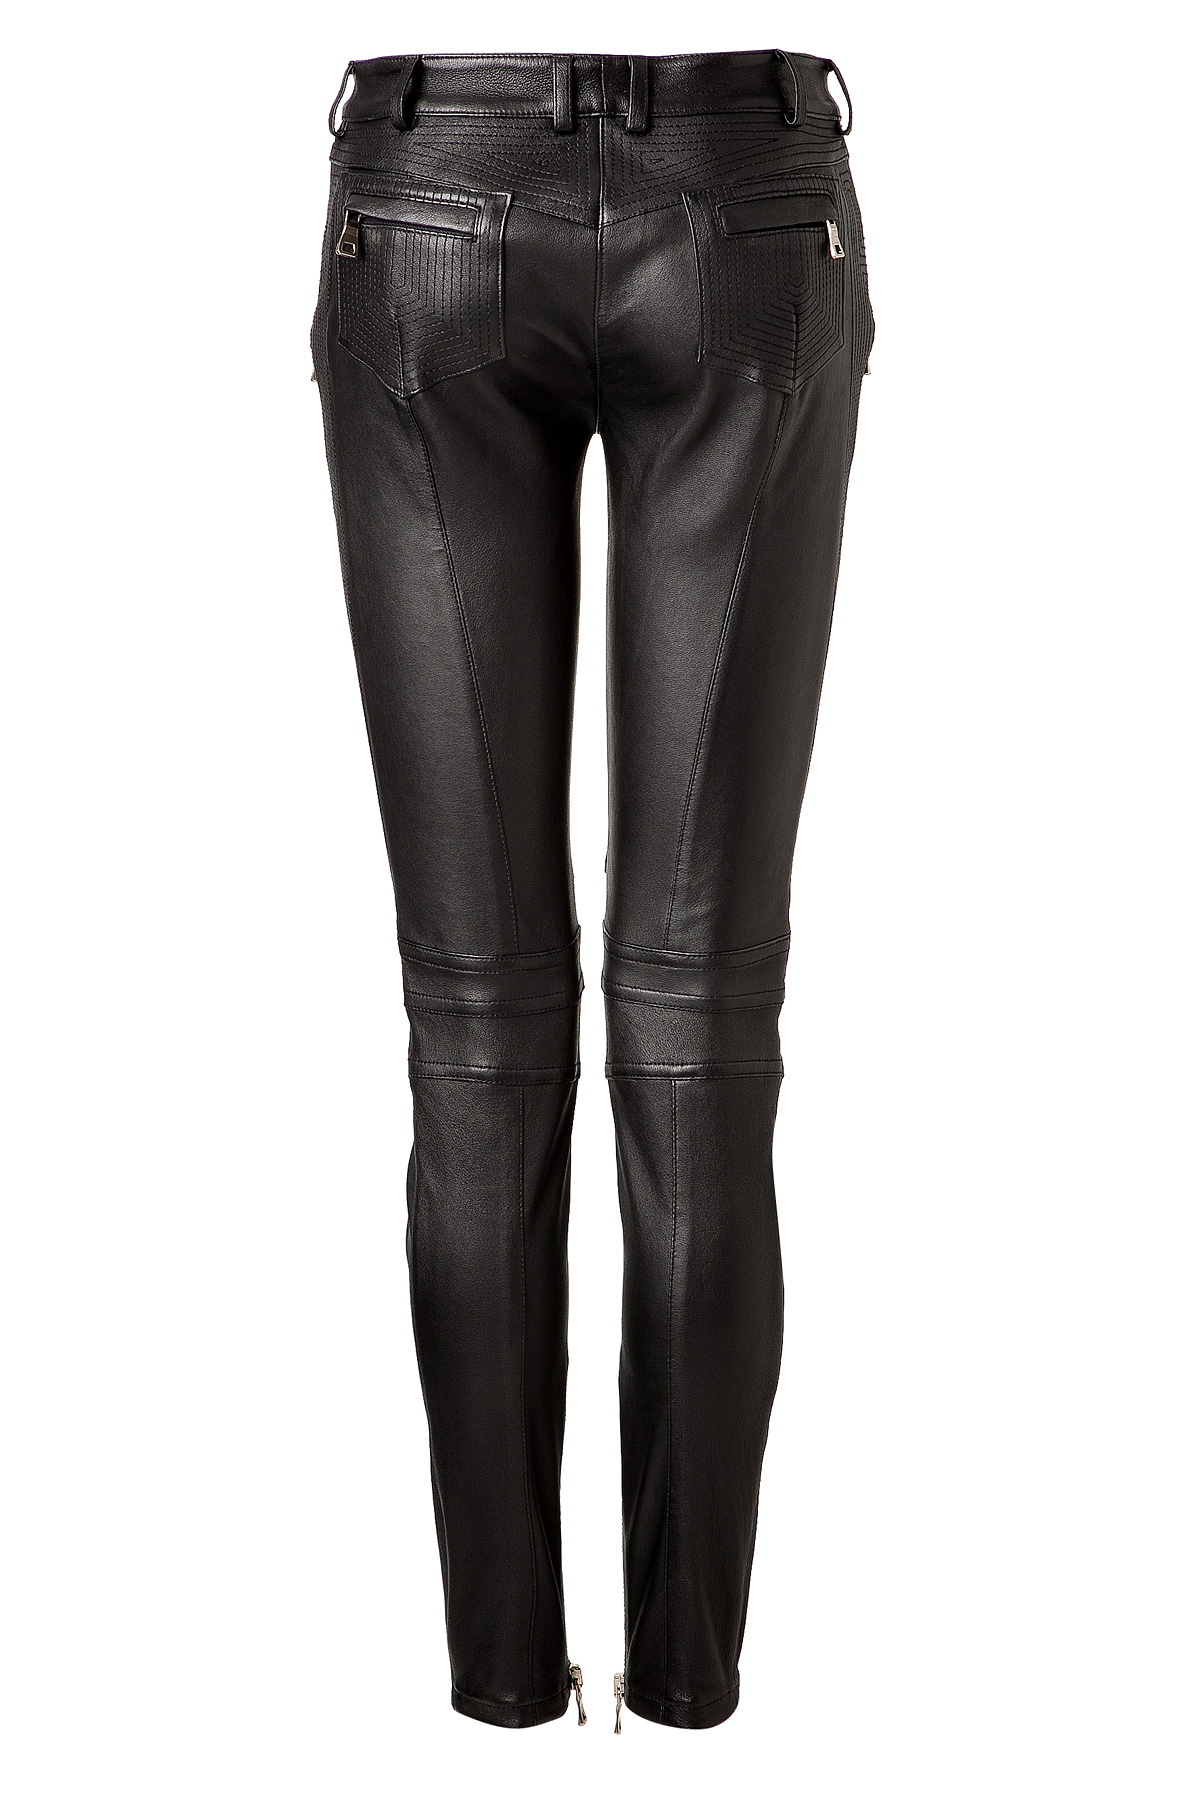 Balmain Leather Biker Pants - Black in Black | Lyst